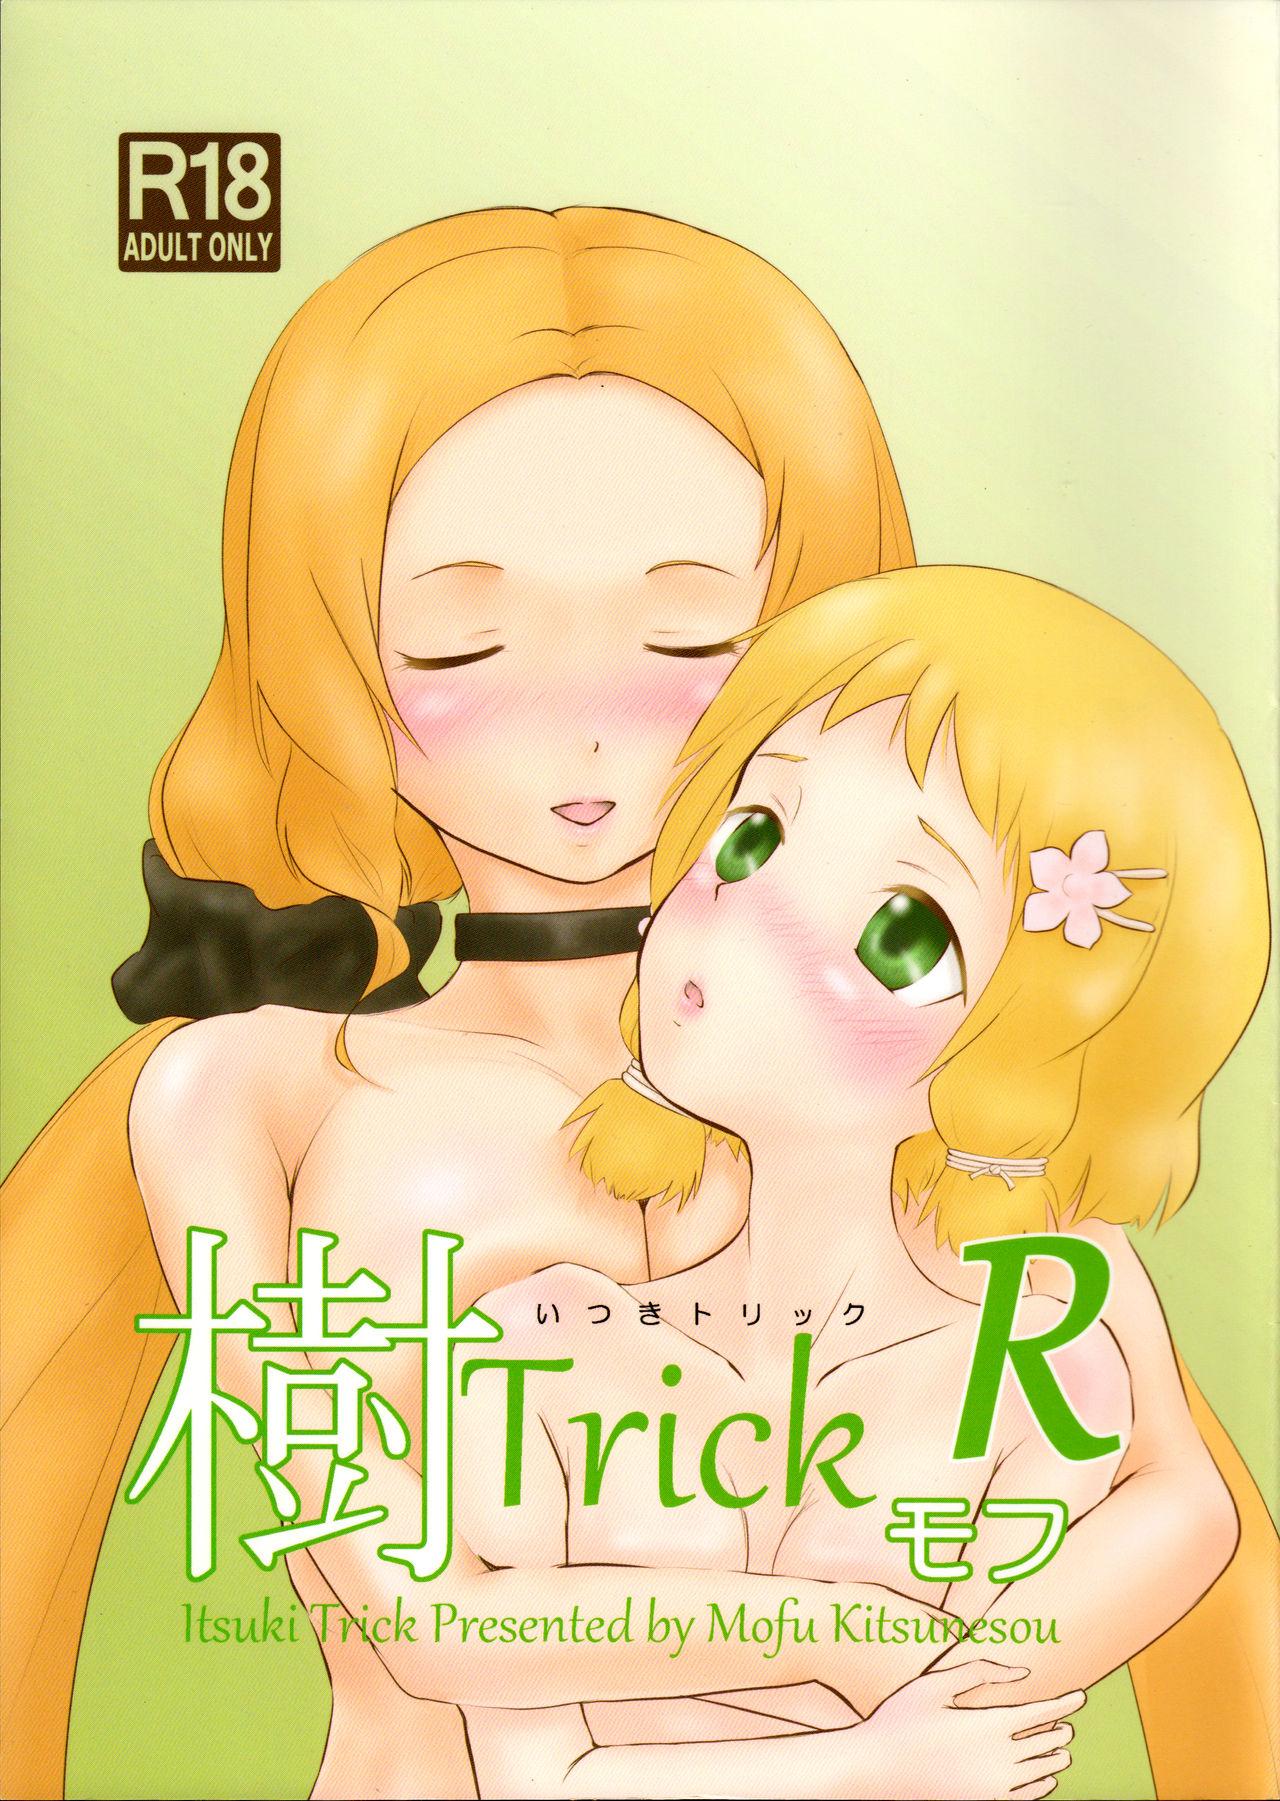 Itsuki Trick R 0